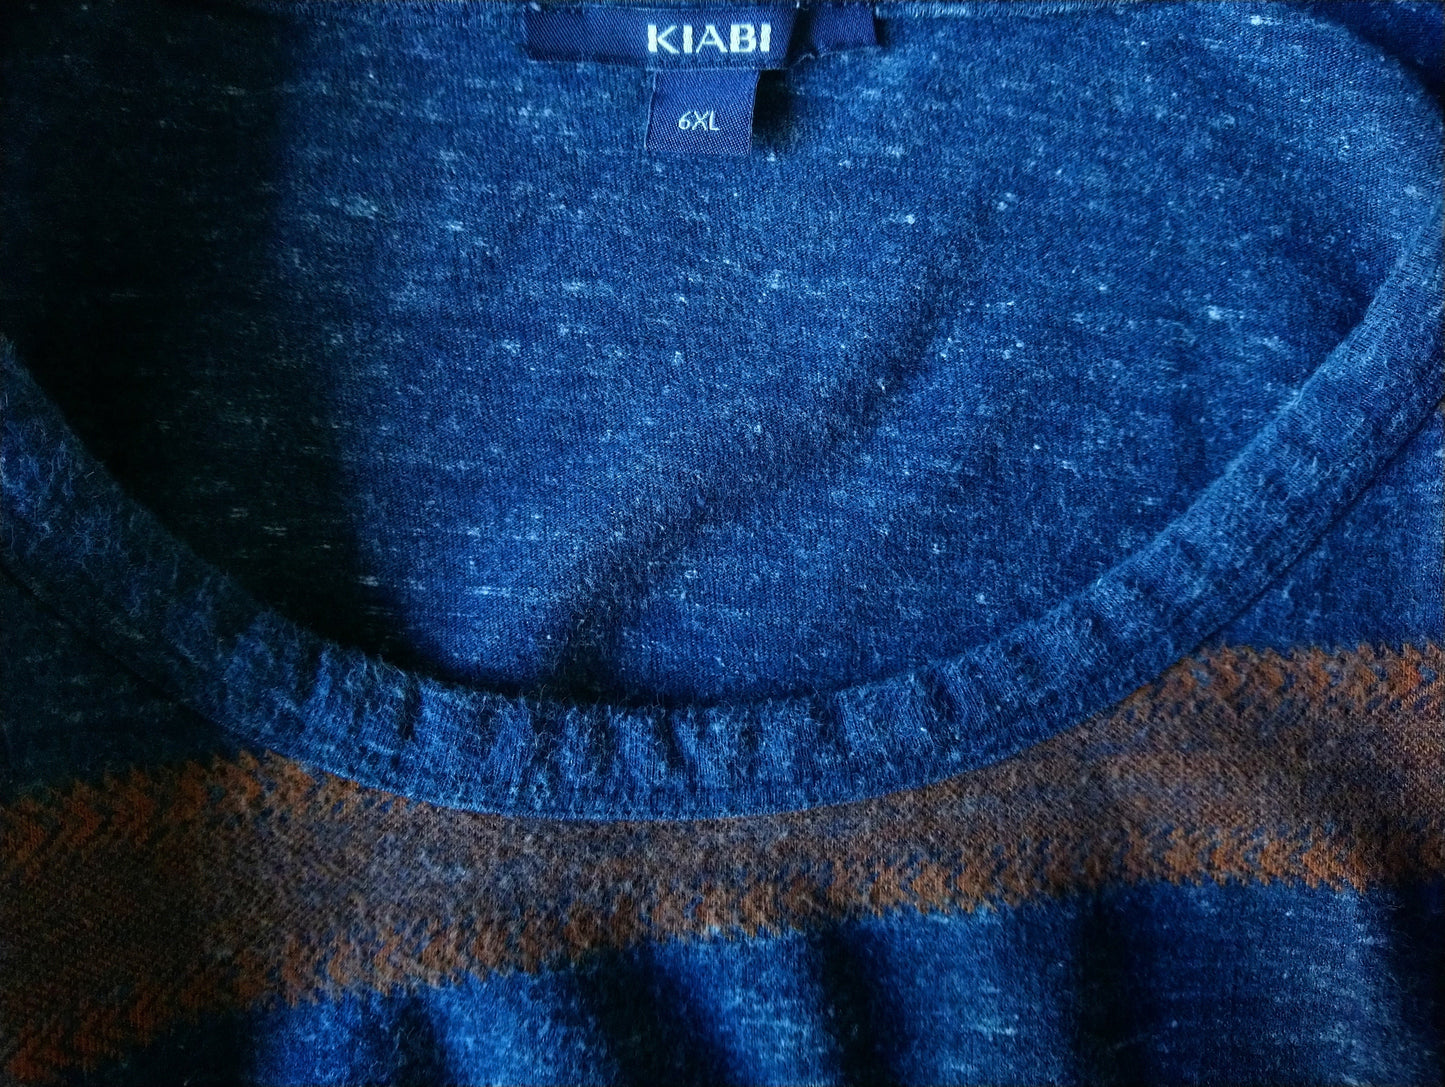 Kiabi -Hemd. Blau Orange gemischt. Größe 6xl / xxxxxxl